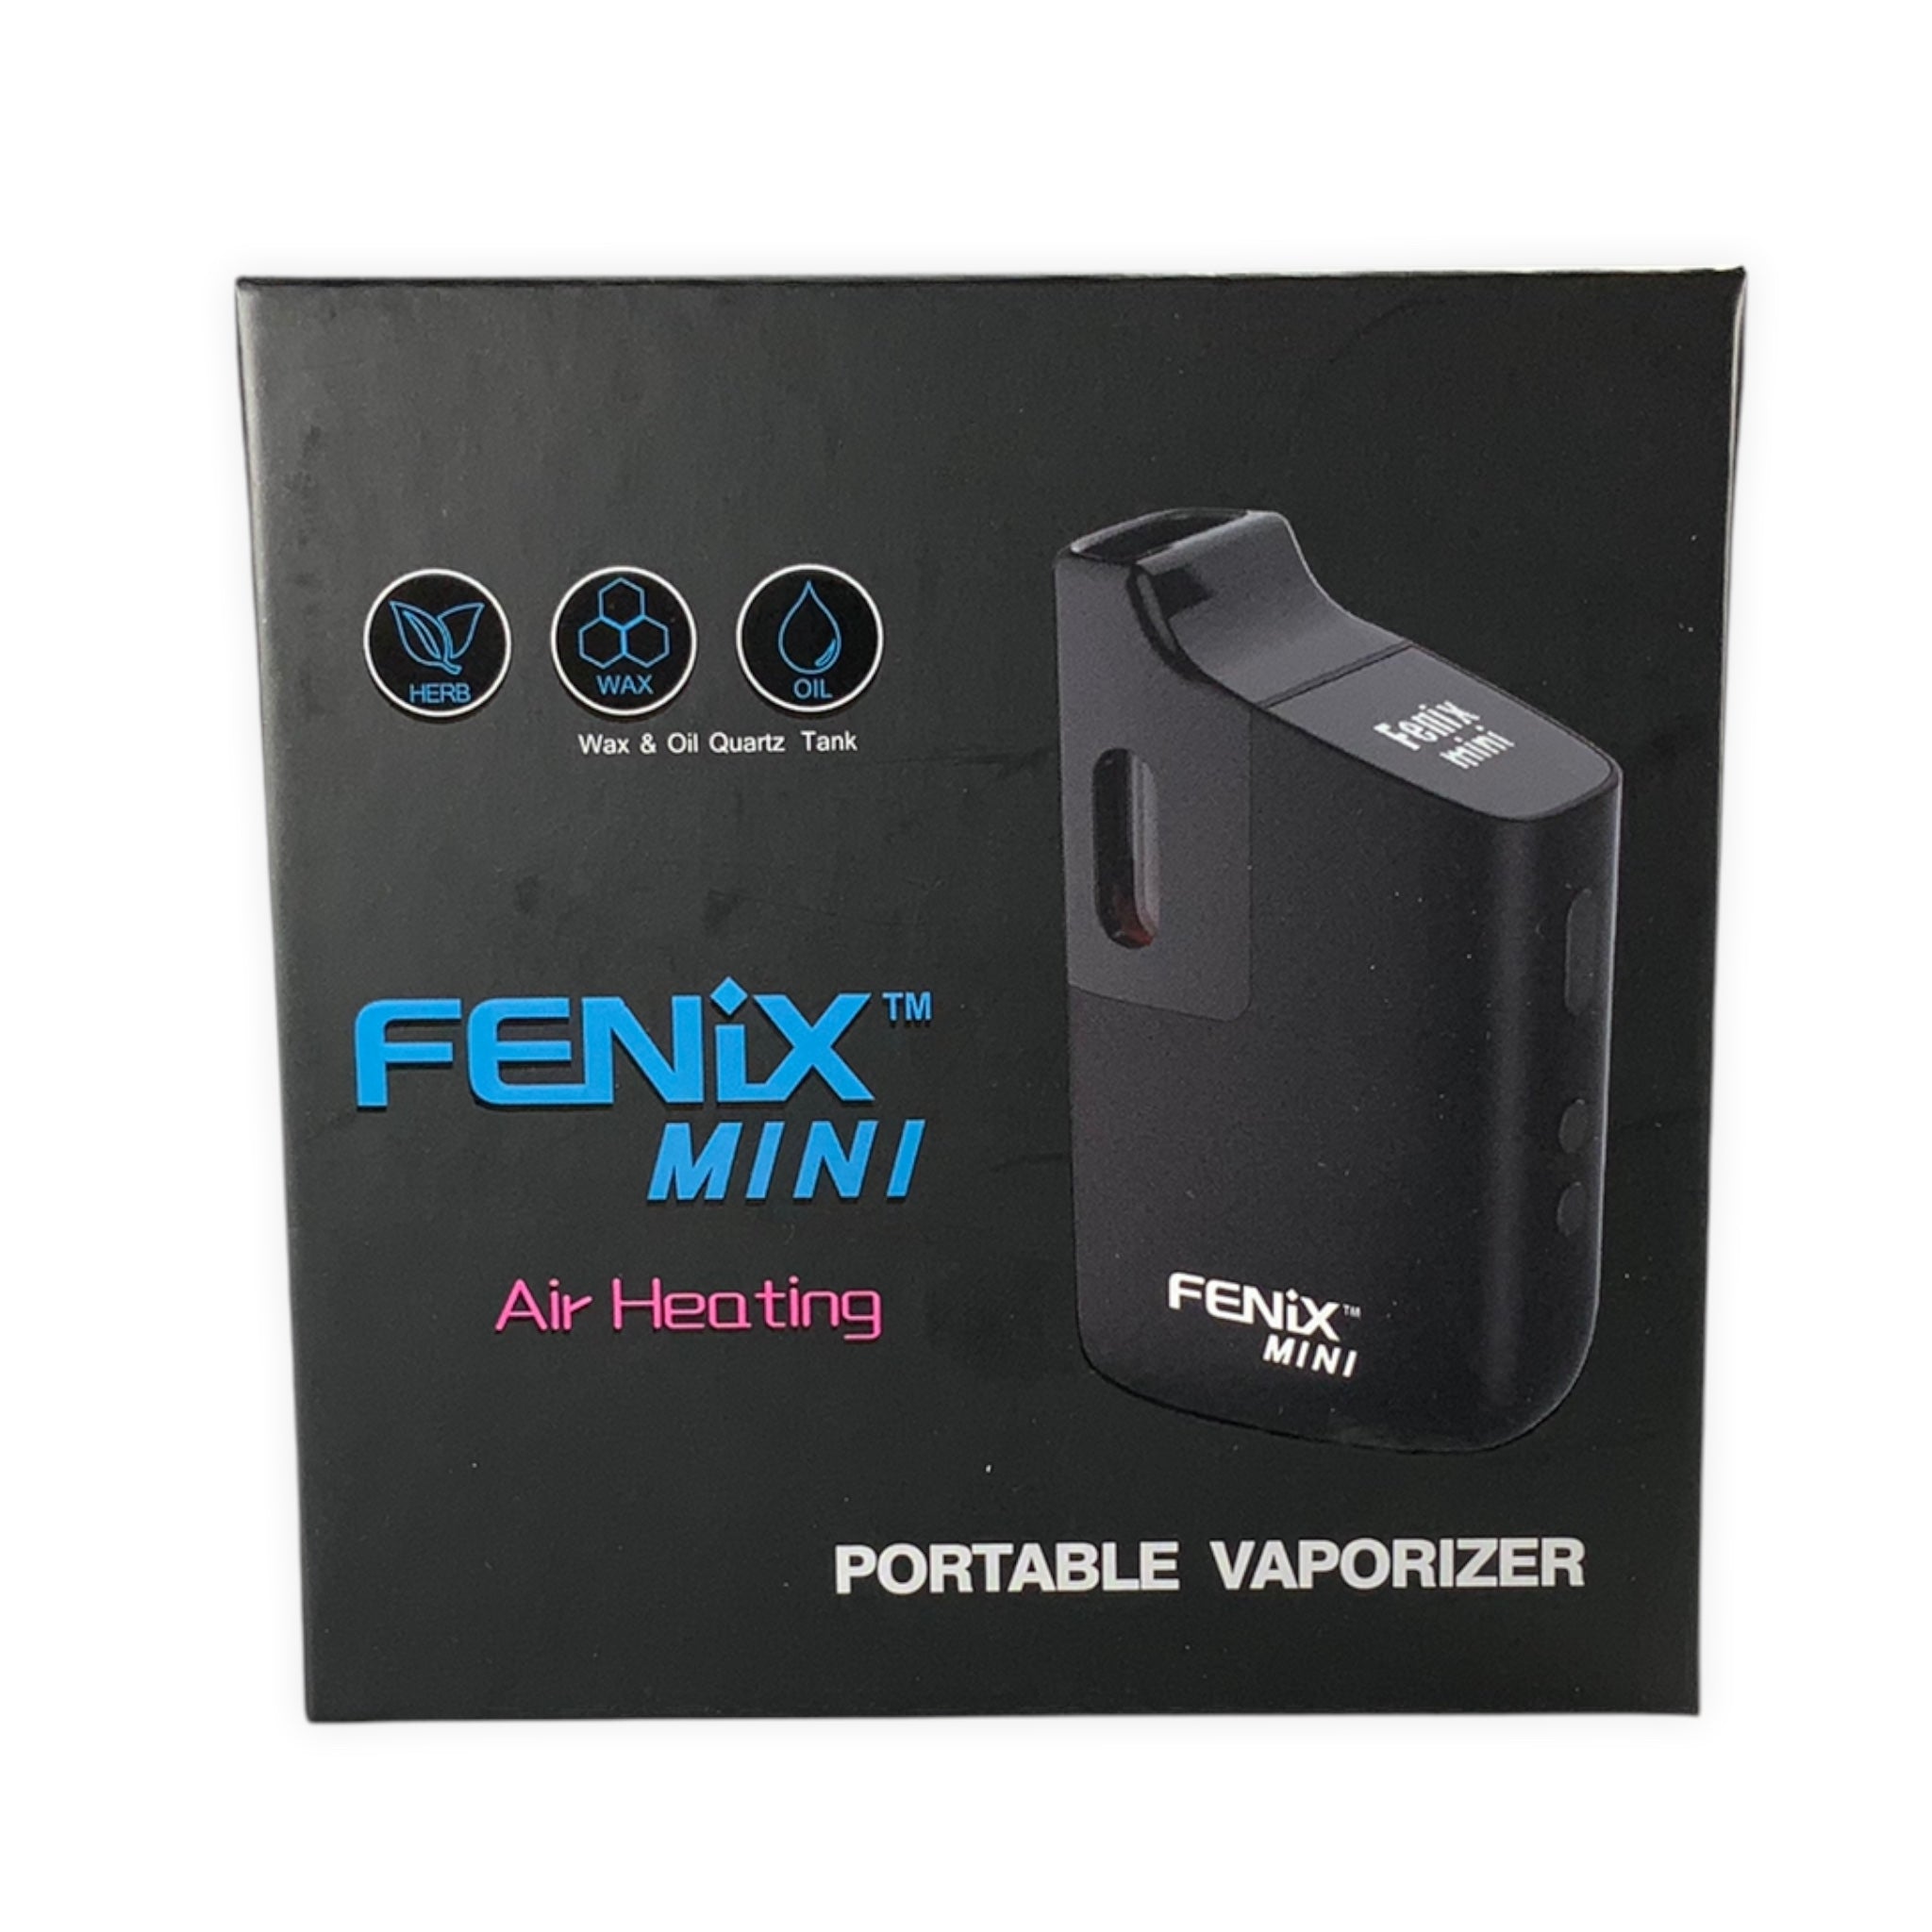 Fenix Mini Verpackung